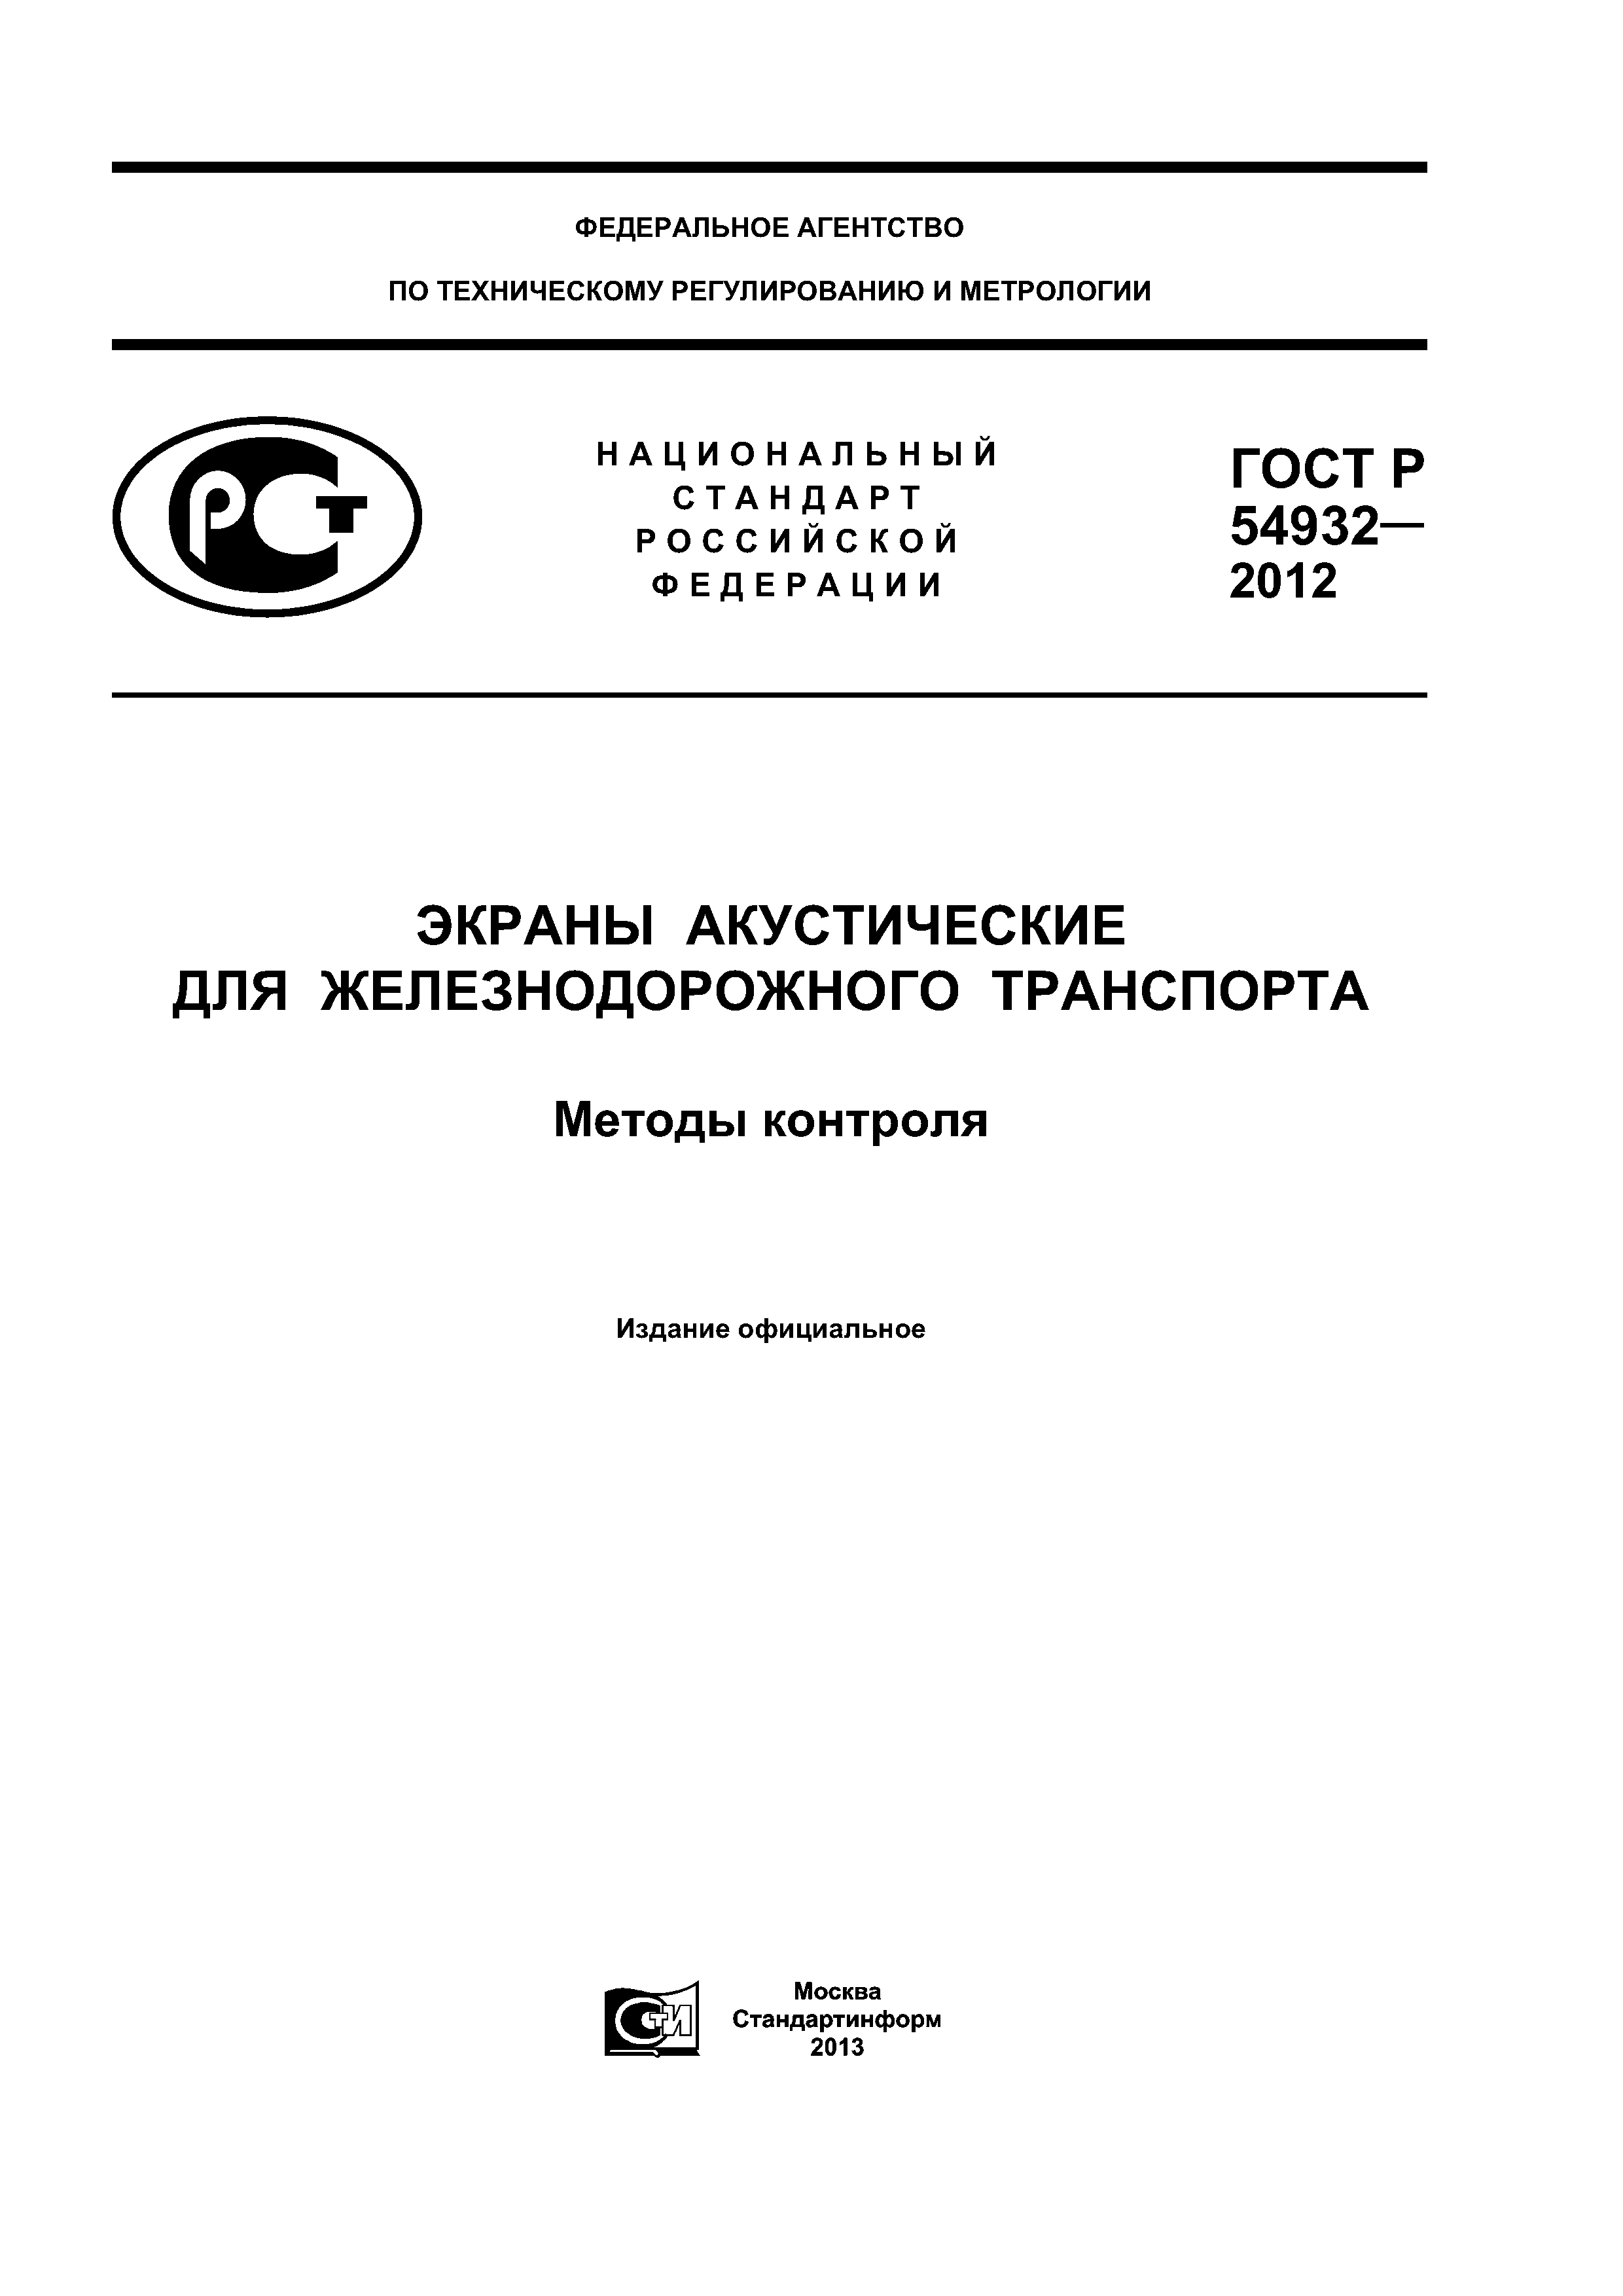 ГОСТ Р 54932-2012